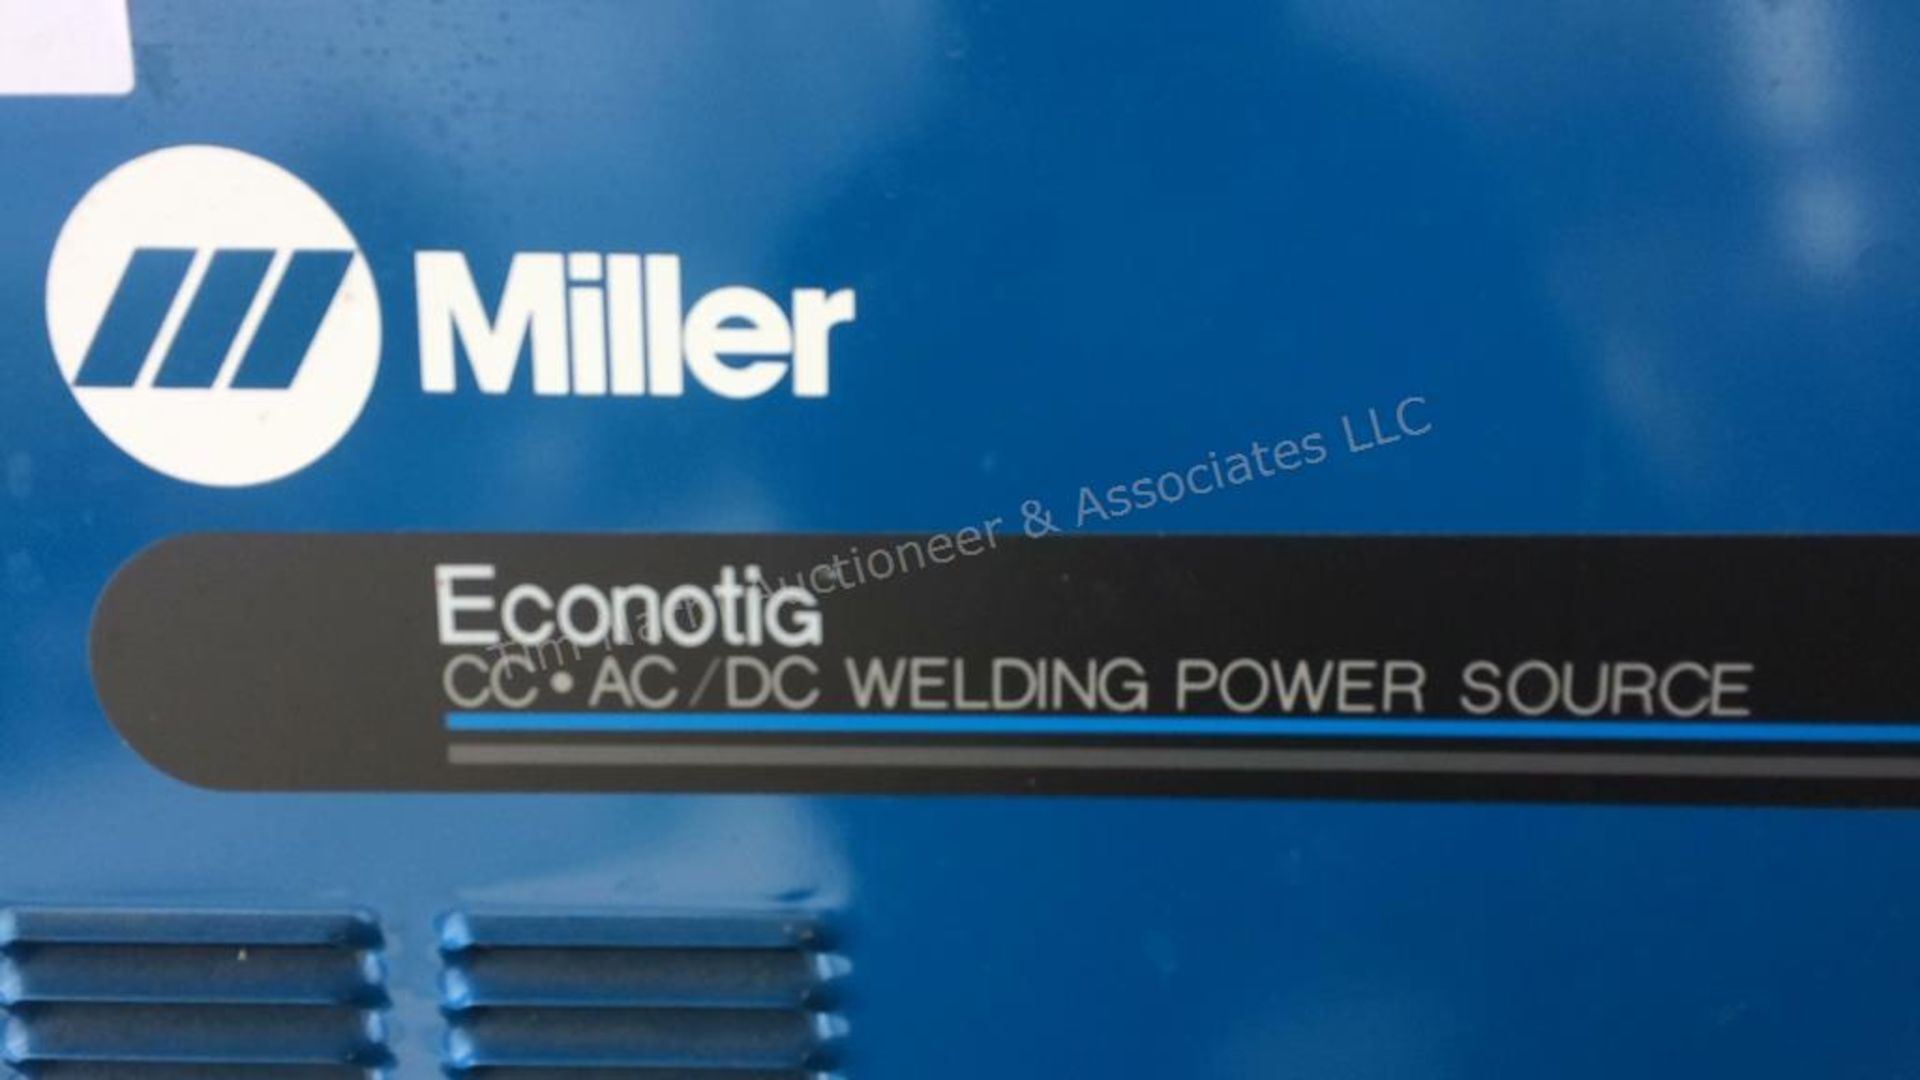 A: Miller Econotig CC•AC/DC welding power source - Image 4 of 4